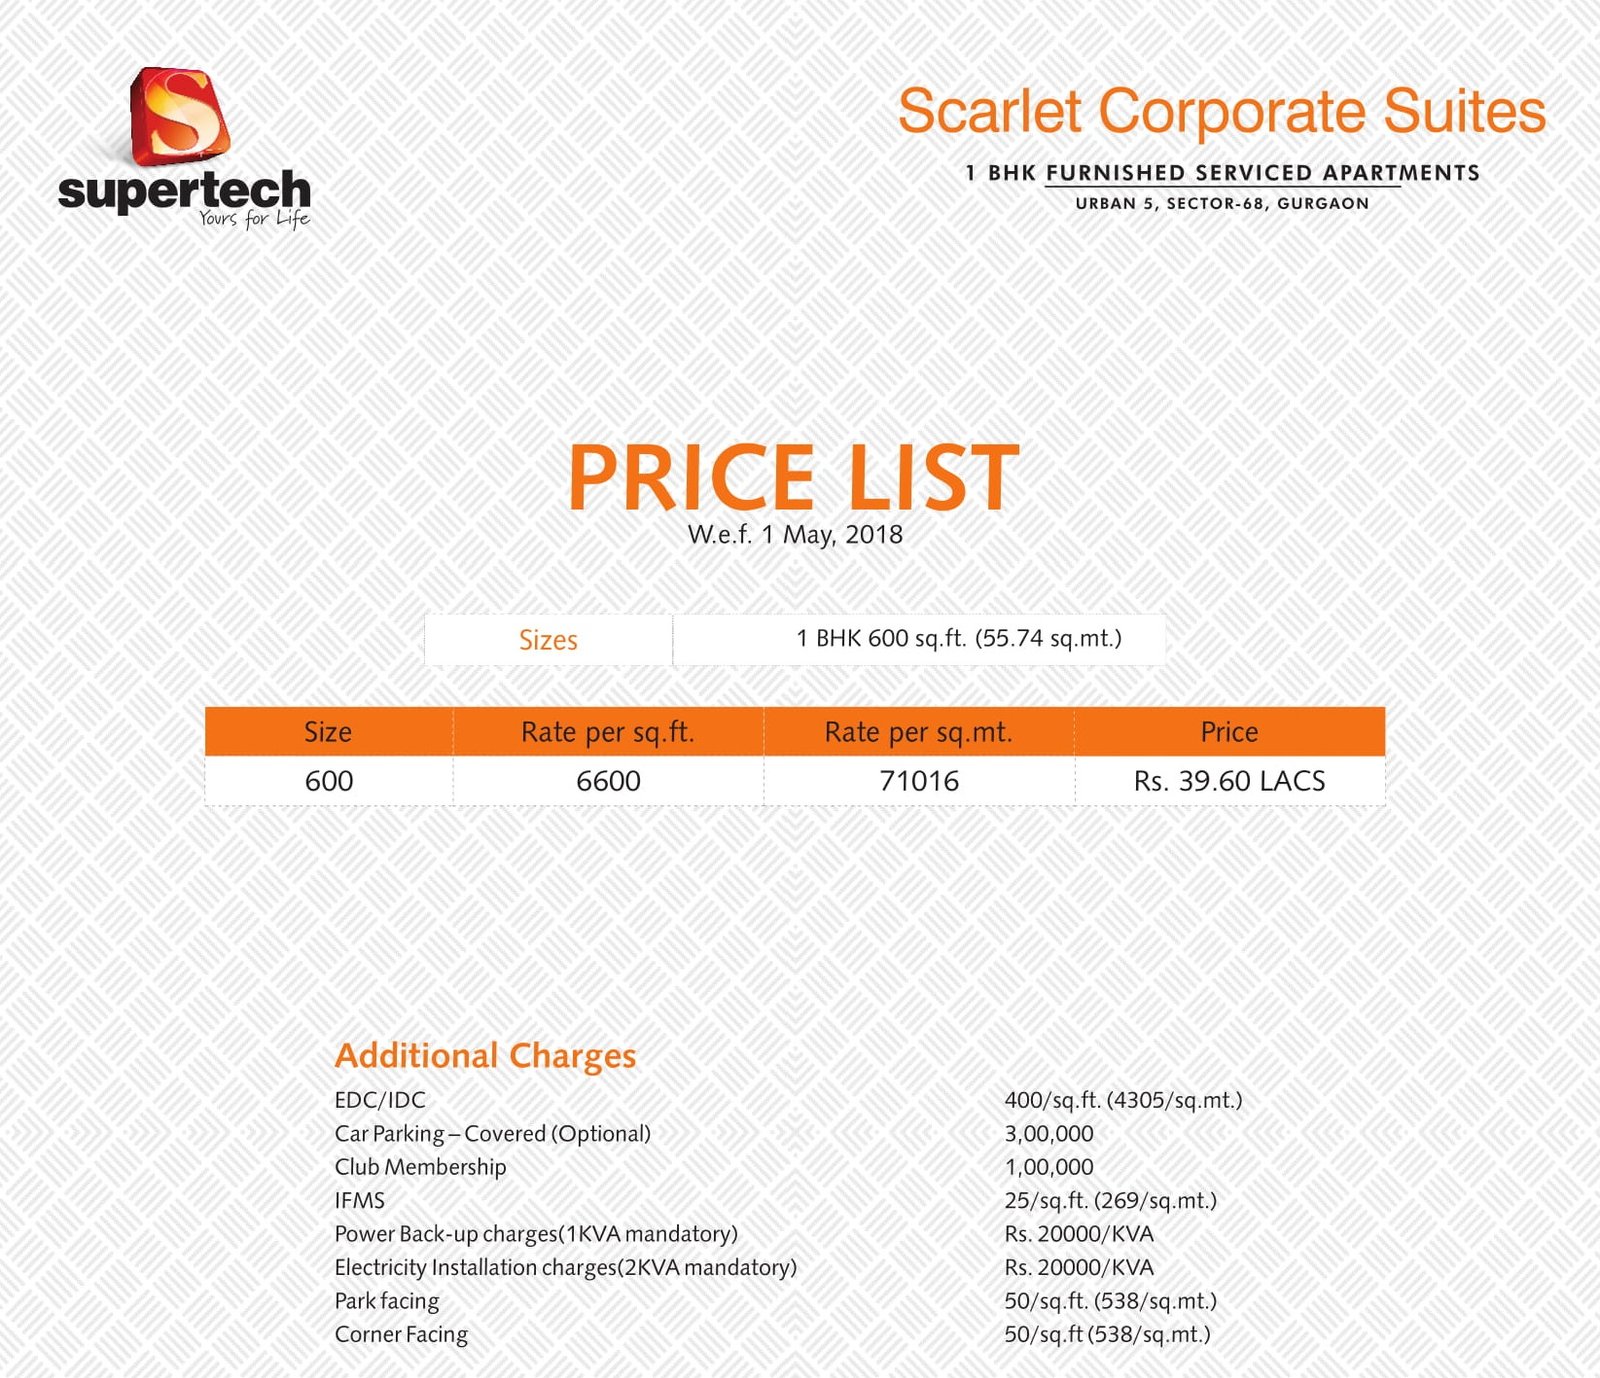 Supertech-Scarlet-Corporate-Suites-Price-List